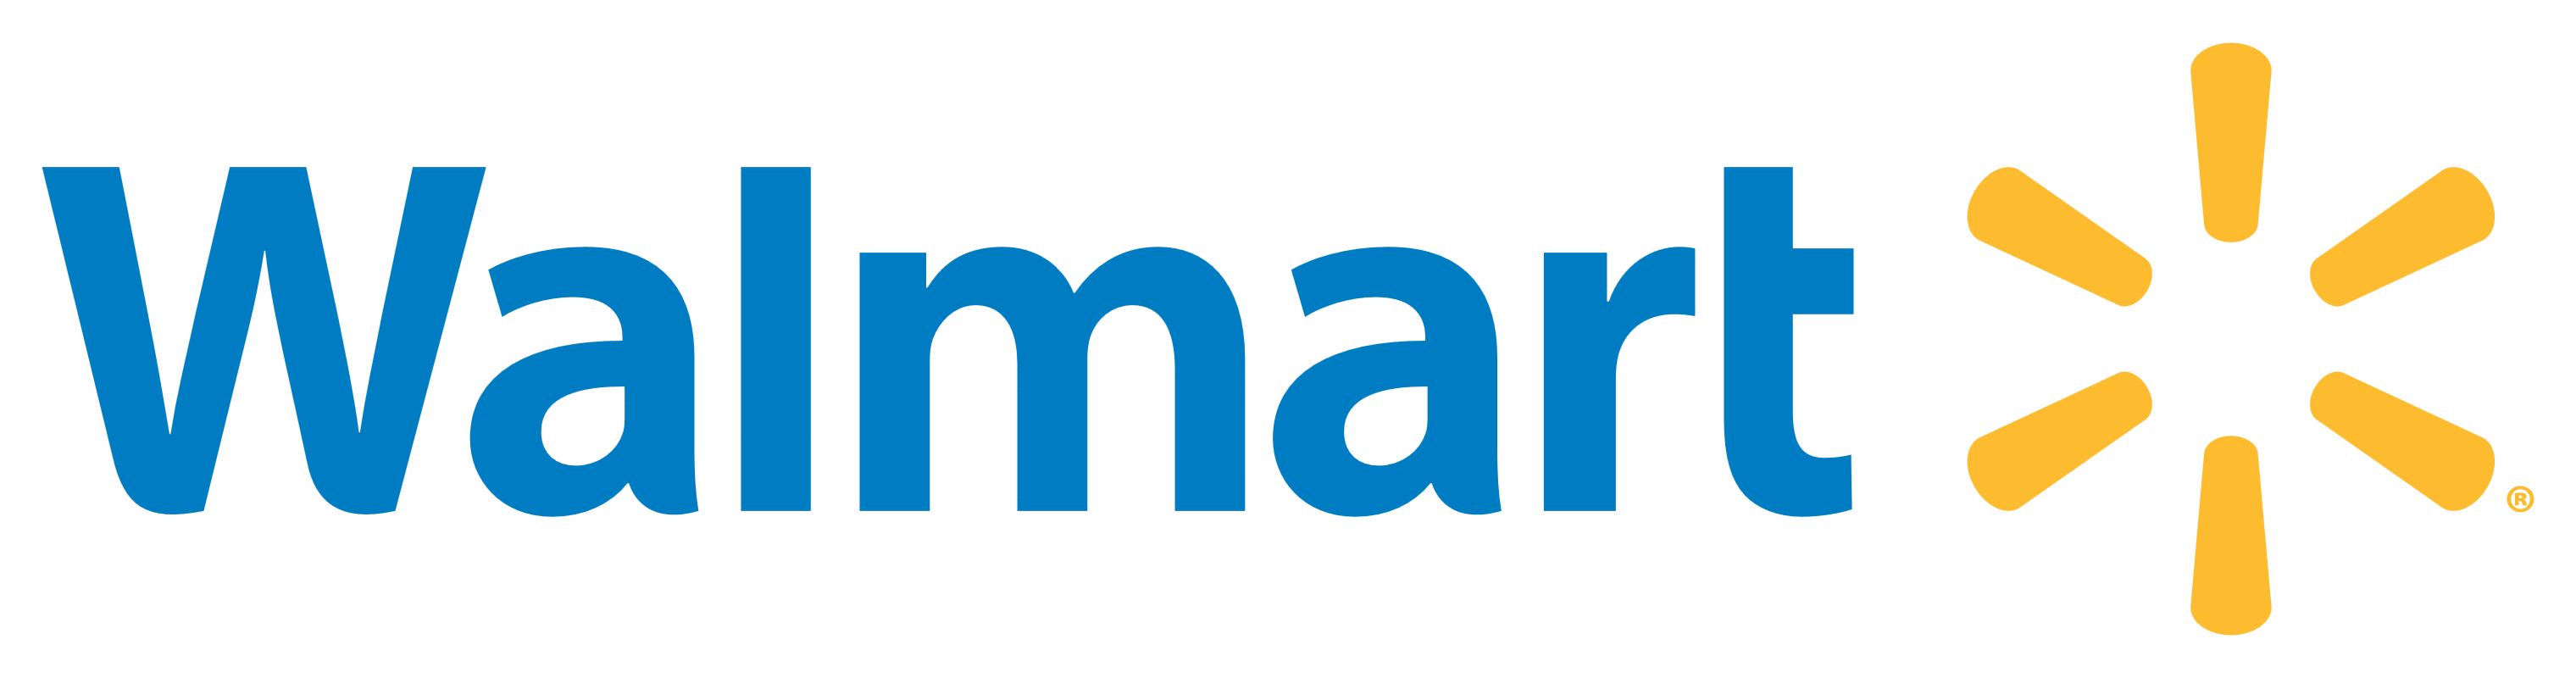 Walmart Retail Services Group